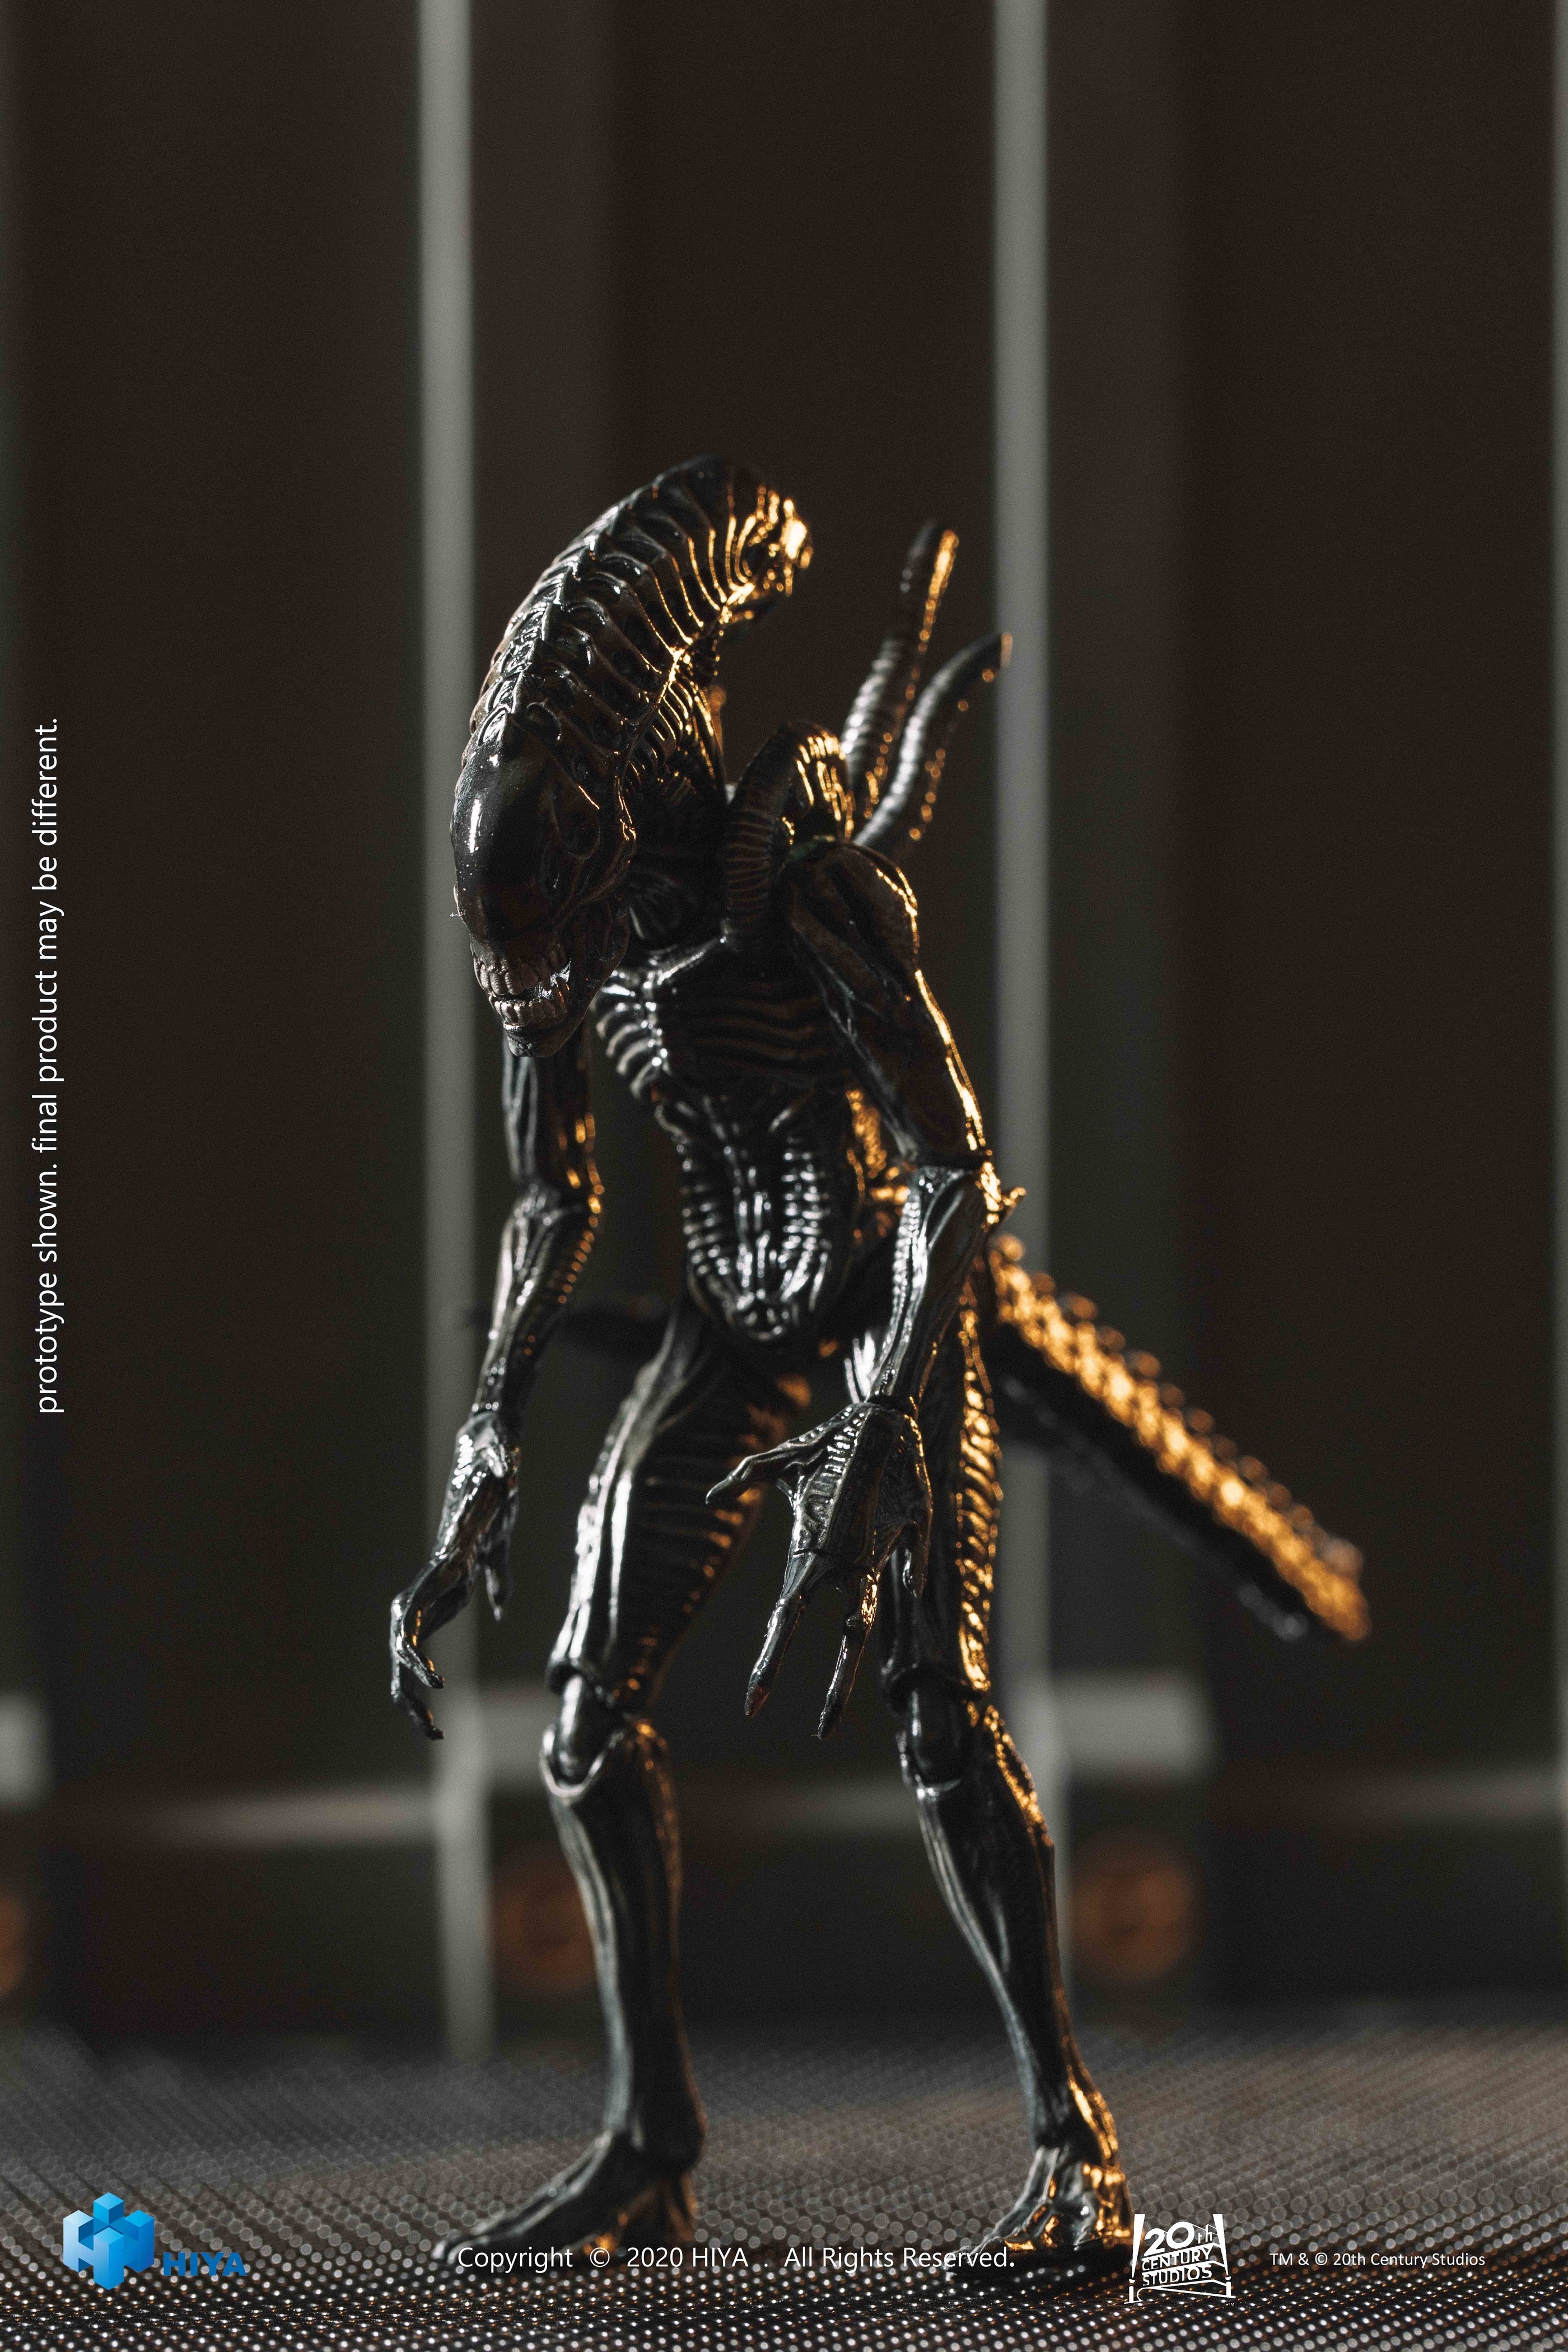 Aliens vs. Predator: Requiem - Is Aliens vs. Predator: Requiem on